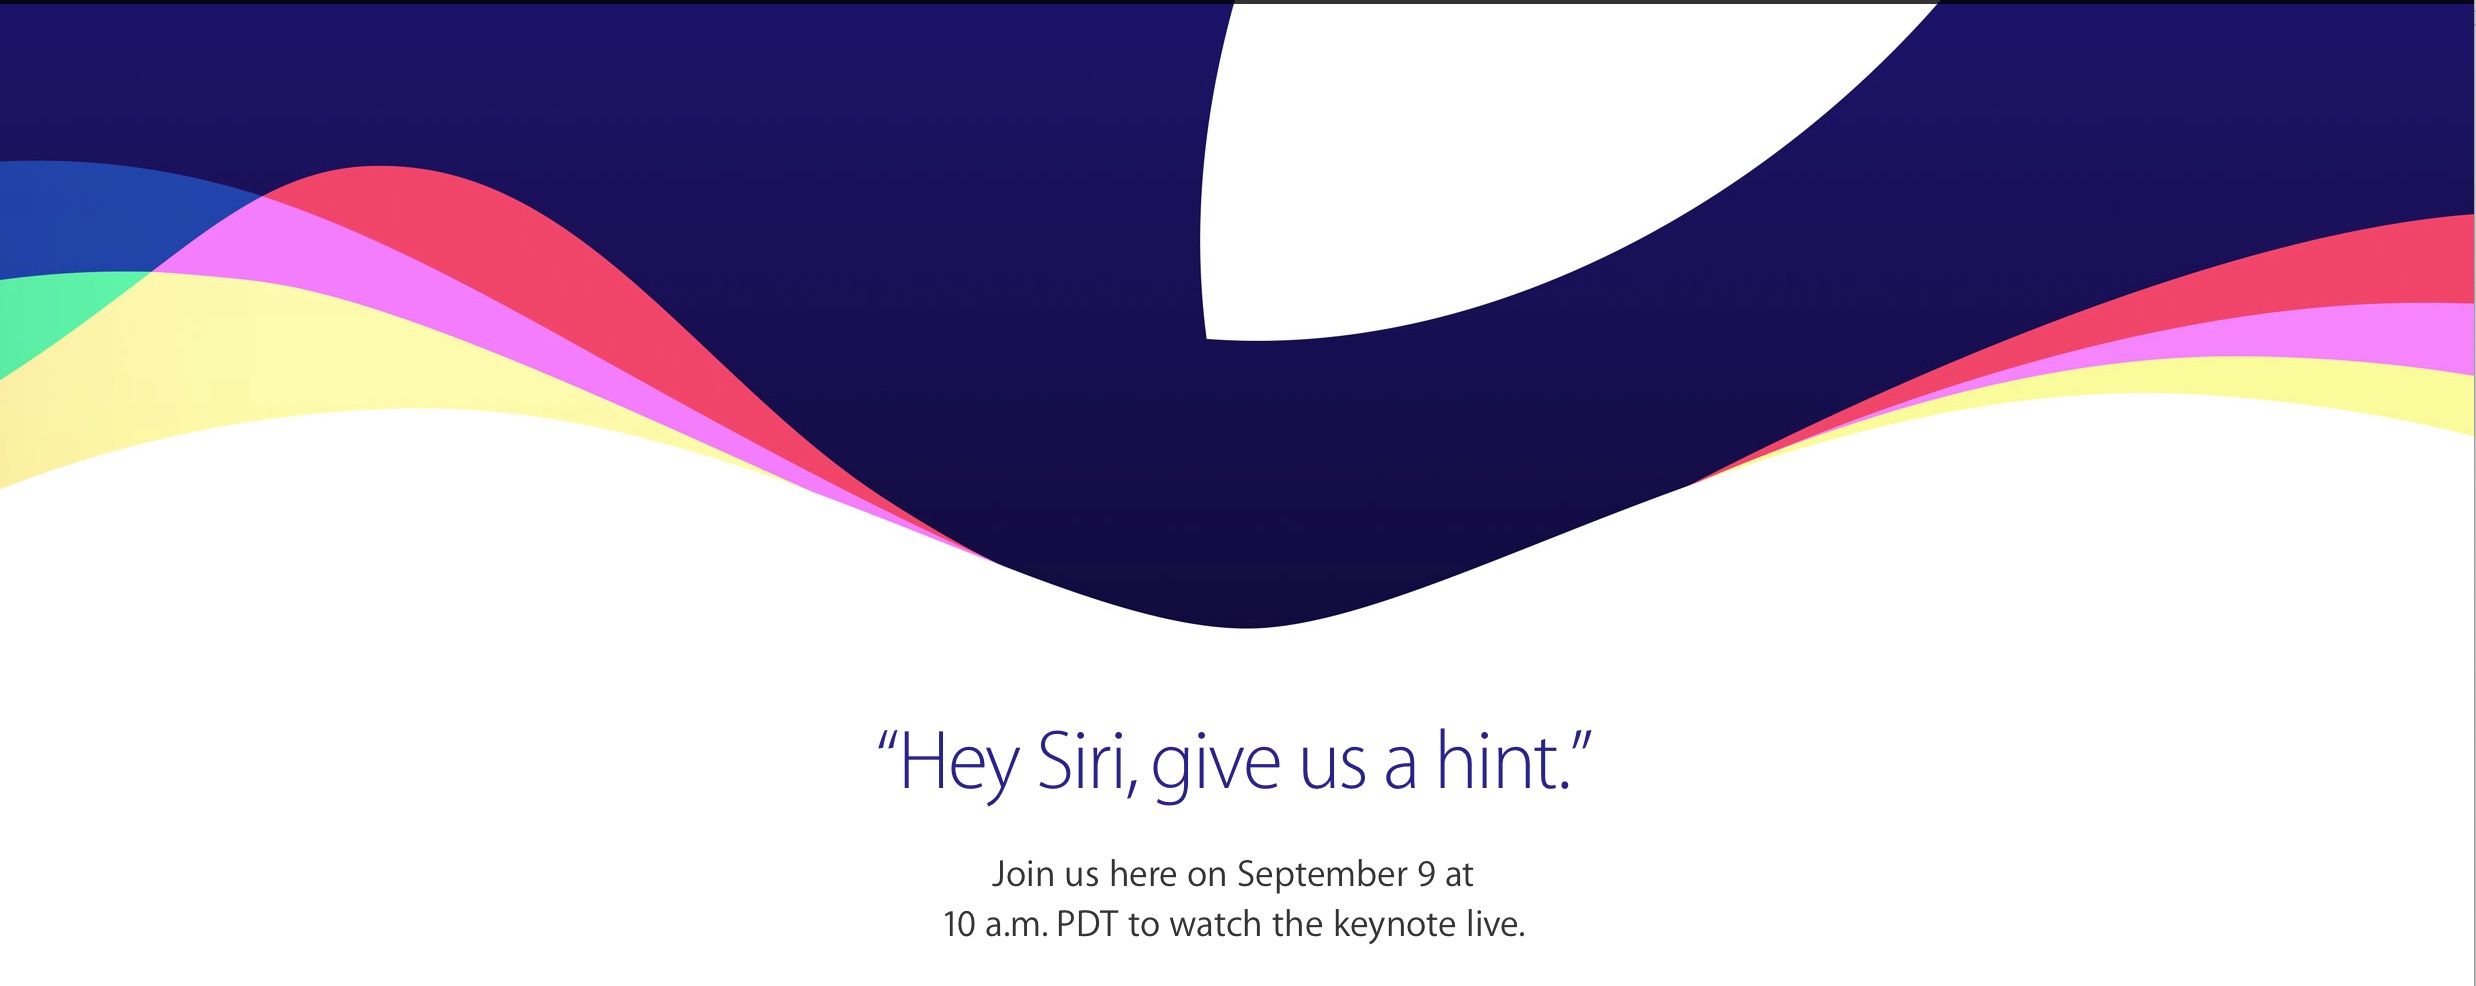 apple-events-special-event-september-2015-apple.jpg